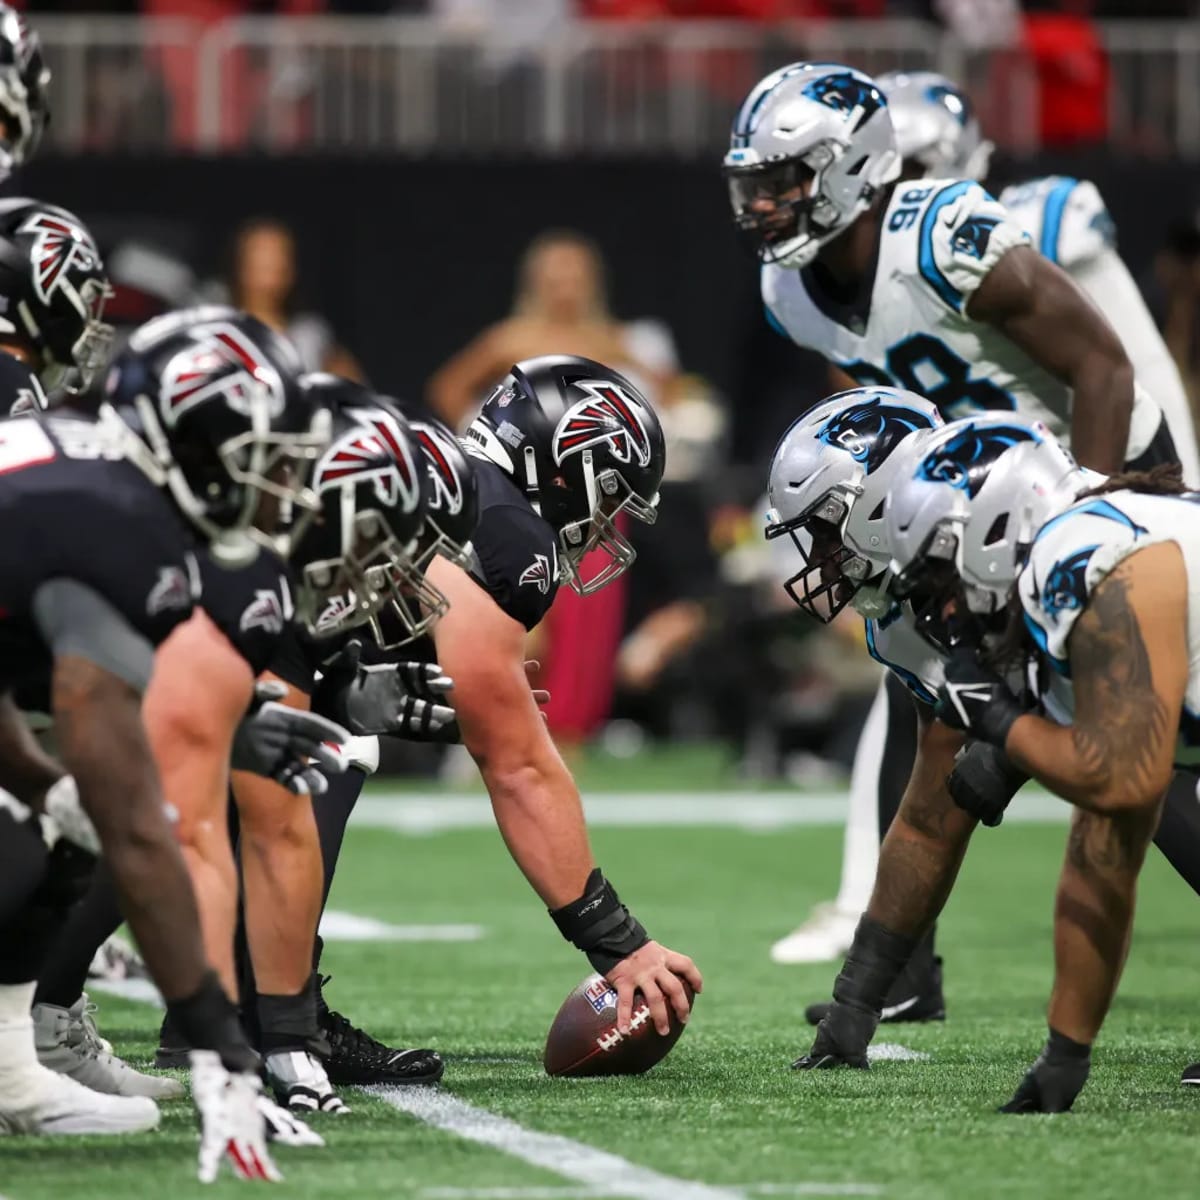 Carolina Panthers vs. Atlanta Falcons betting odds NFL Week 8 game